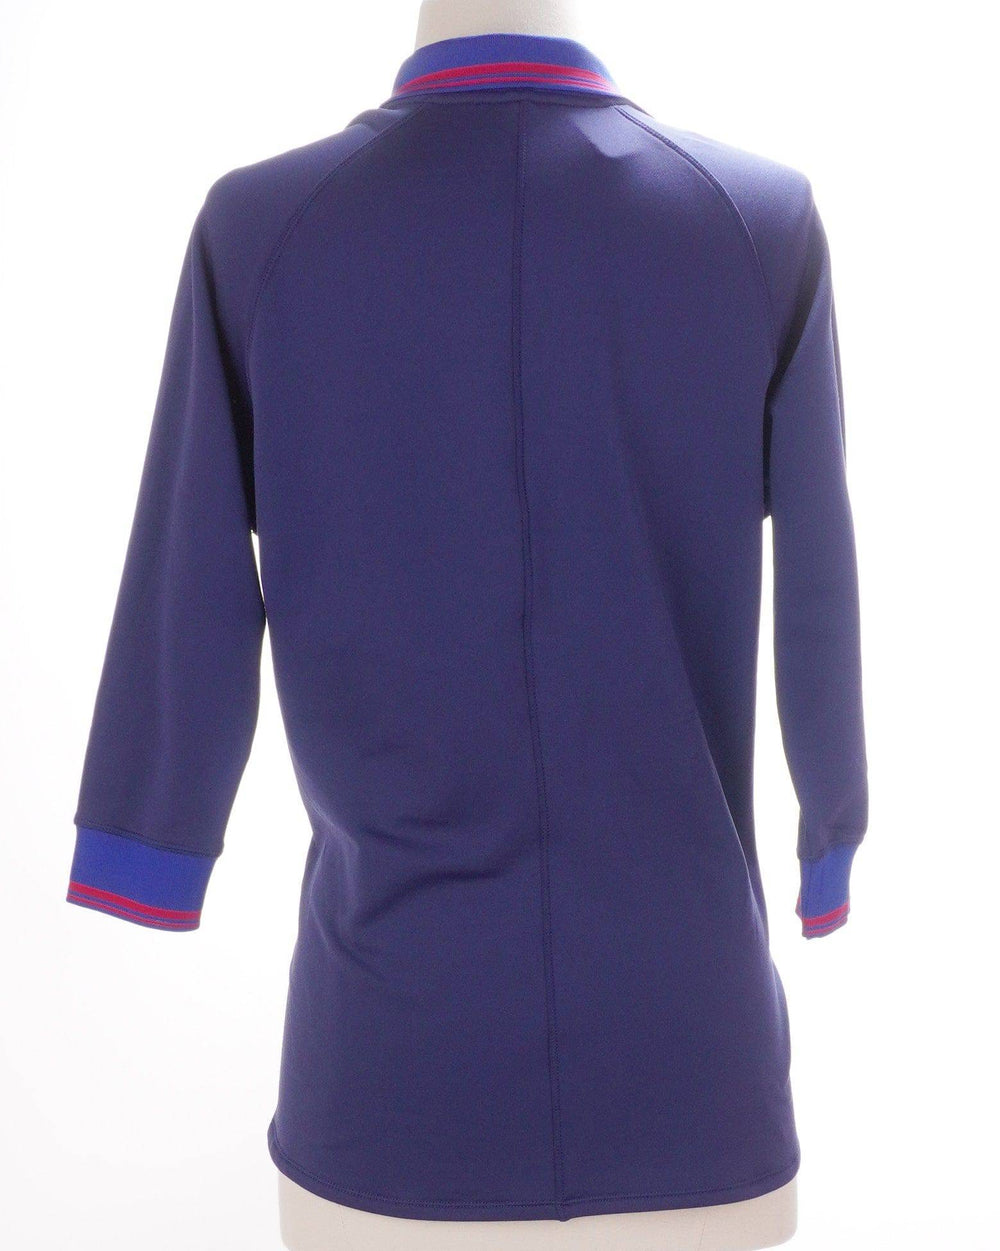 Adidas Navy Blue / Medium / Consigned Adidas Climawarm Long Sleeve Top - Navy Blue - Size Medium